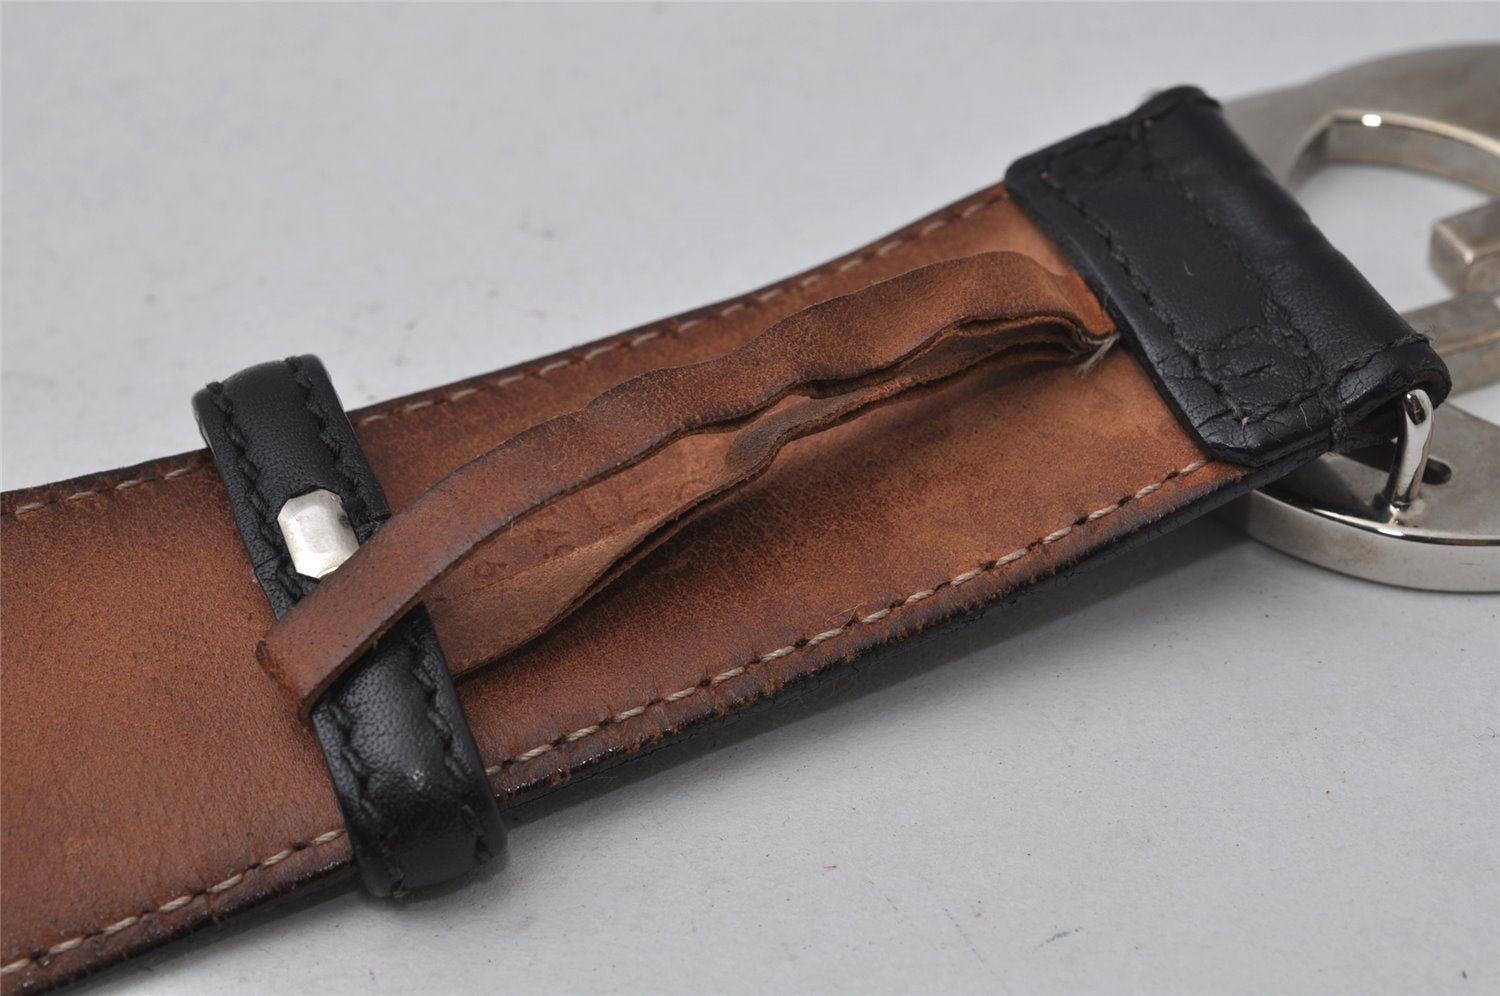 Auth GUCCI Guccissima Interlocking Belt GG Leather 95cm 37.4